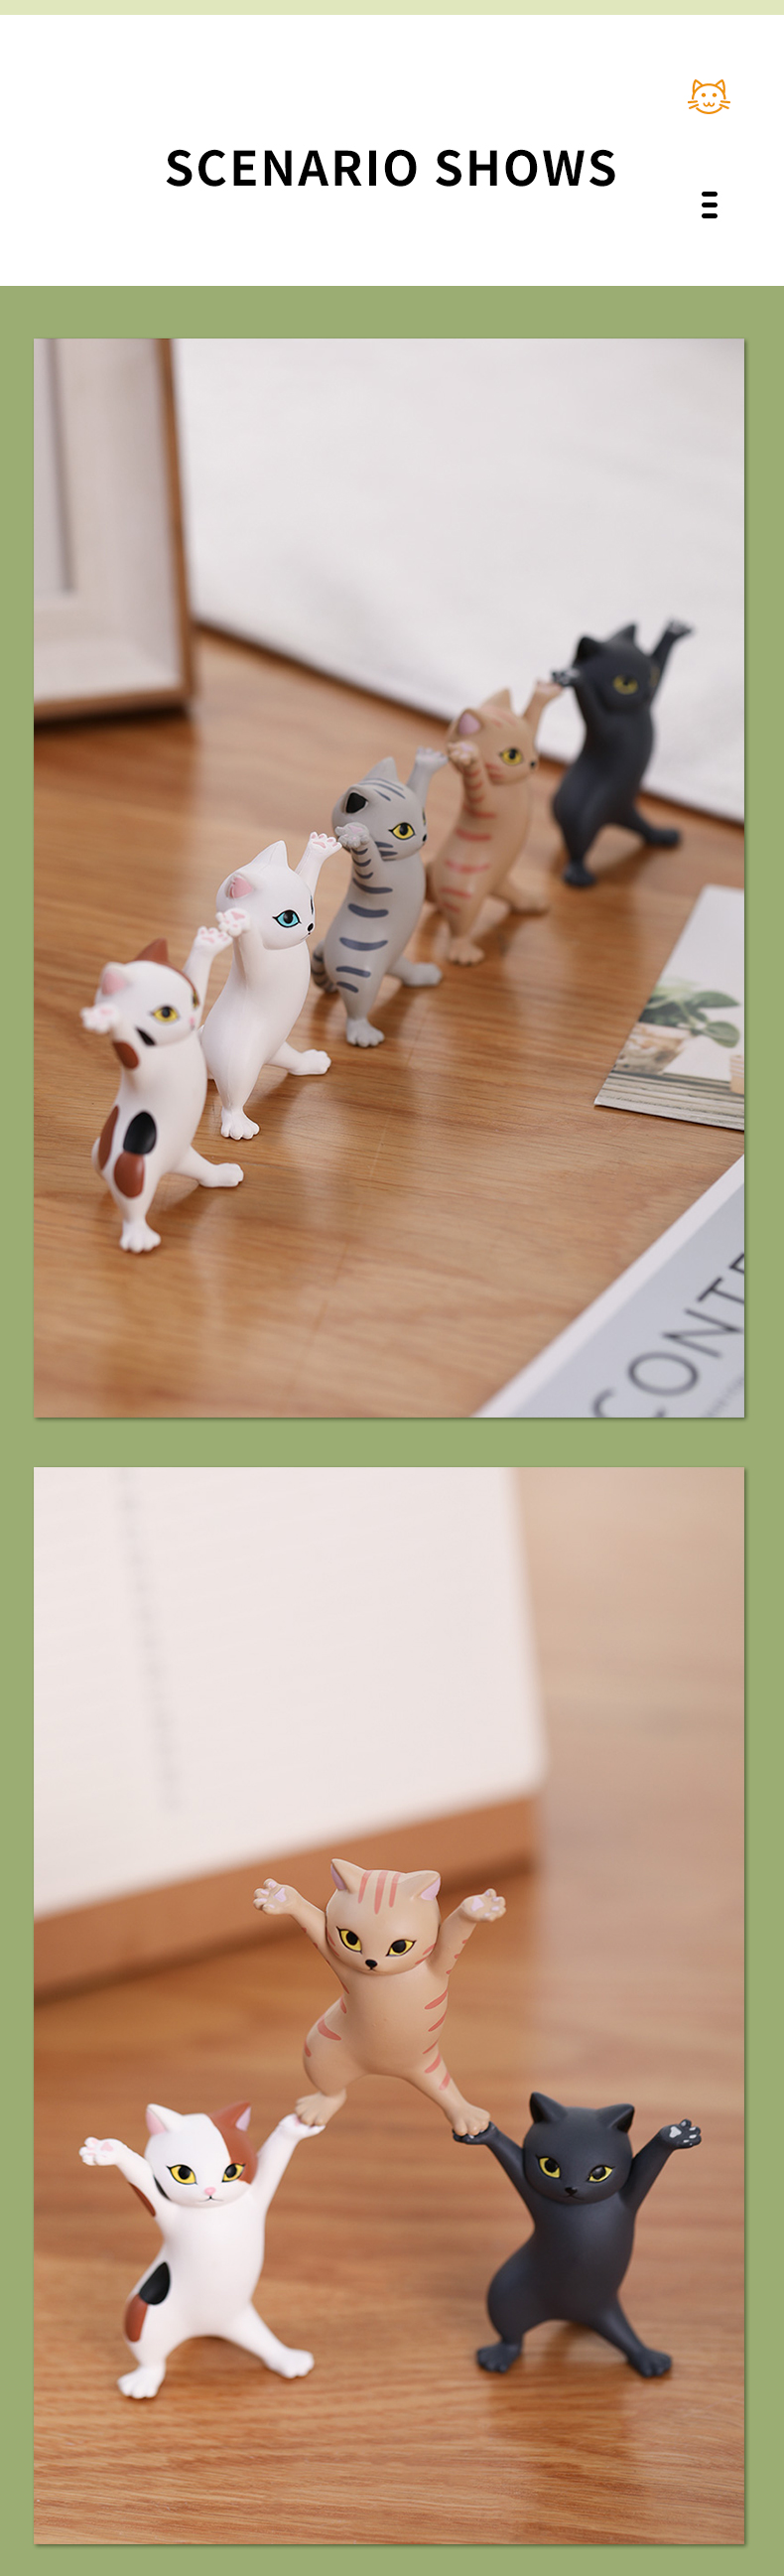 1-PC-Cartoon-Dancing-Cat-Figure-Doll-Figurines-Handmade-Enchanting-Kittens-Toy-for-Office-Pen-Holder-1838450-4